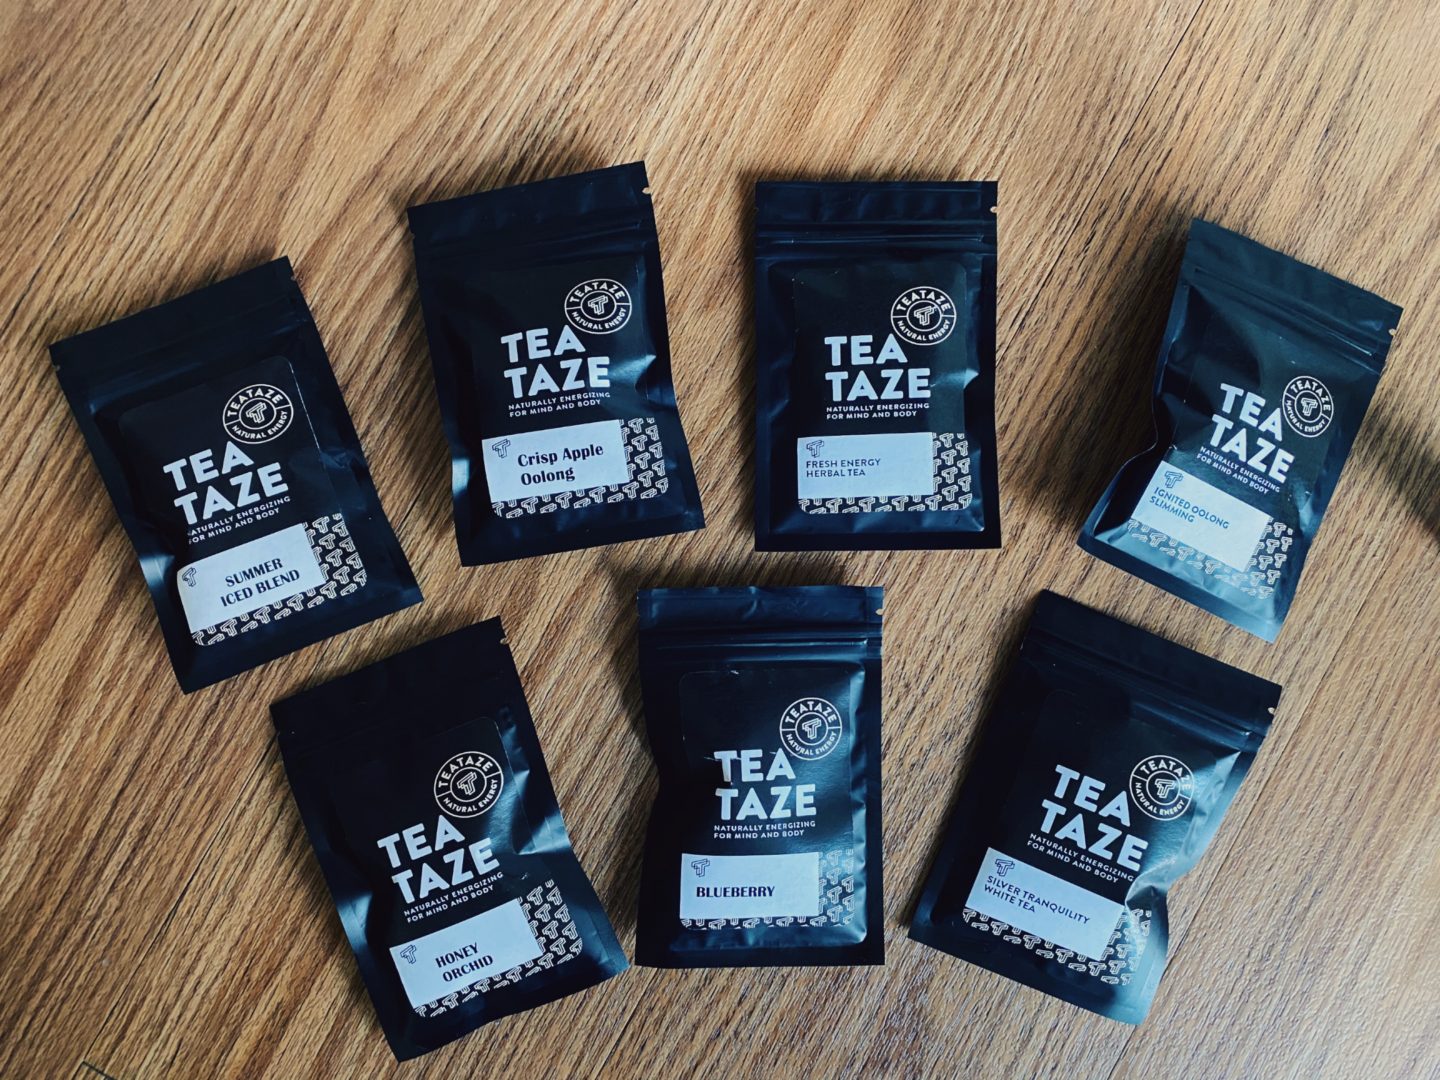 It’s Tea Time with TEATAZE: Tea for Wellness and Energy